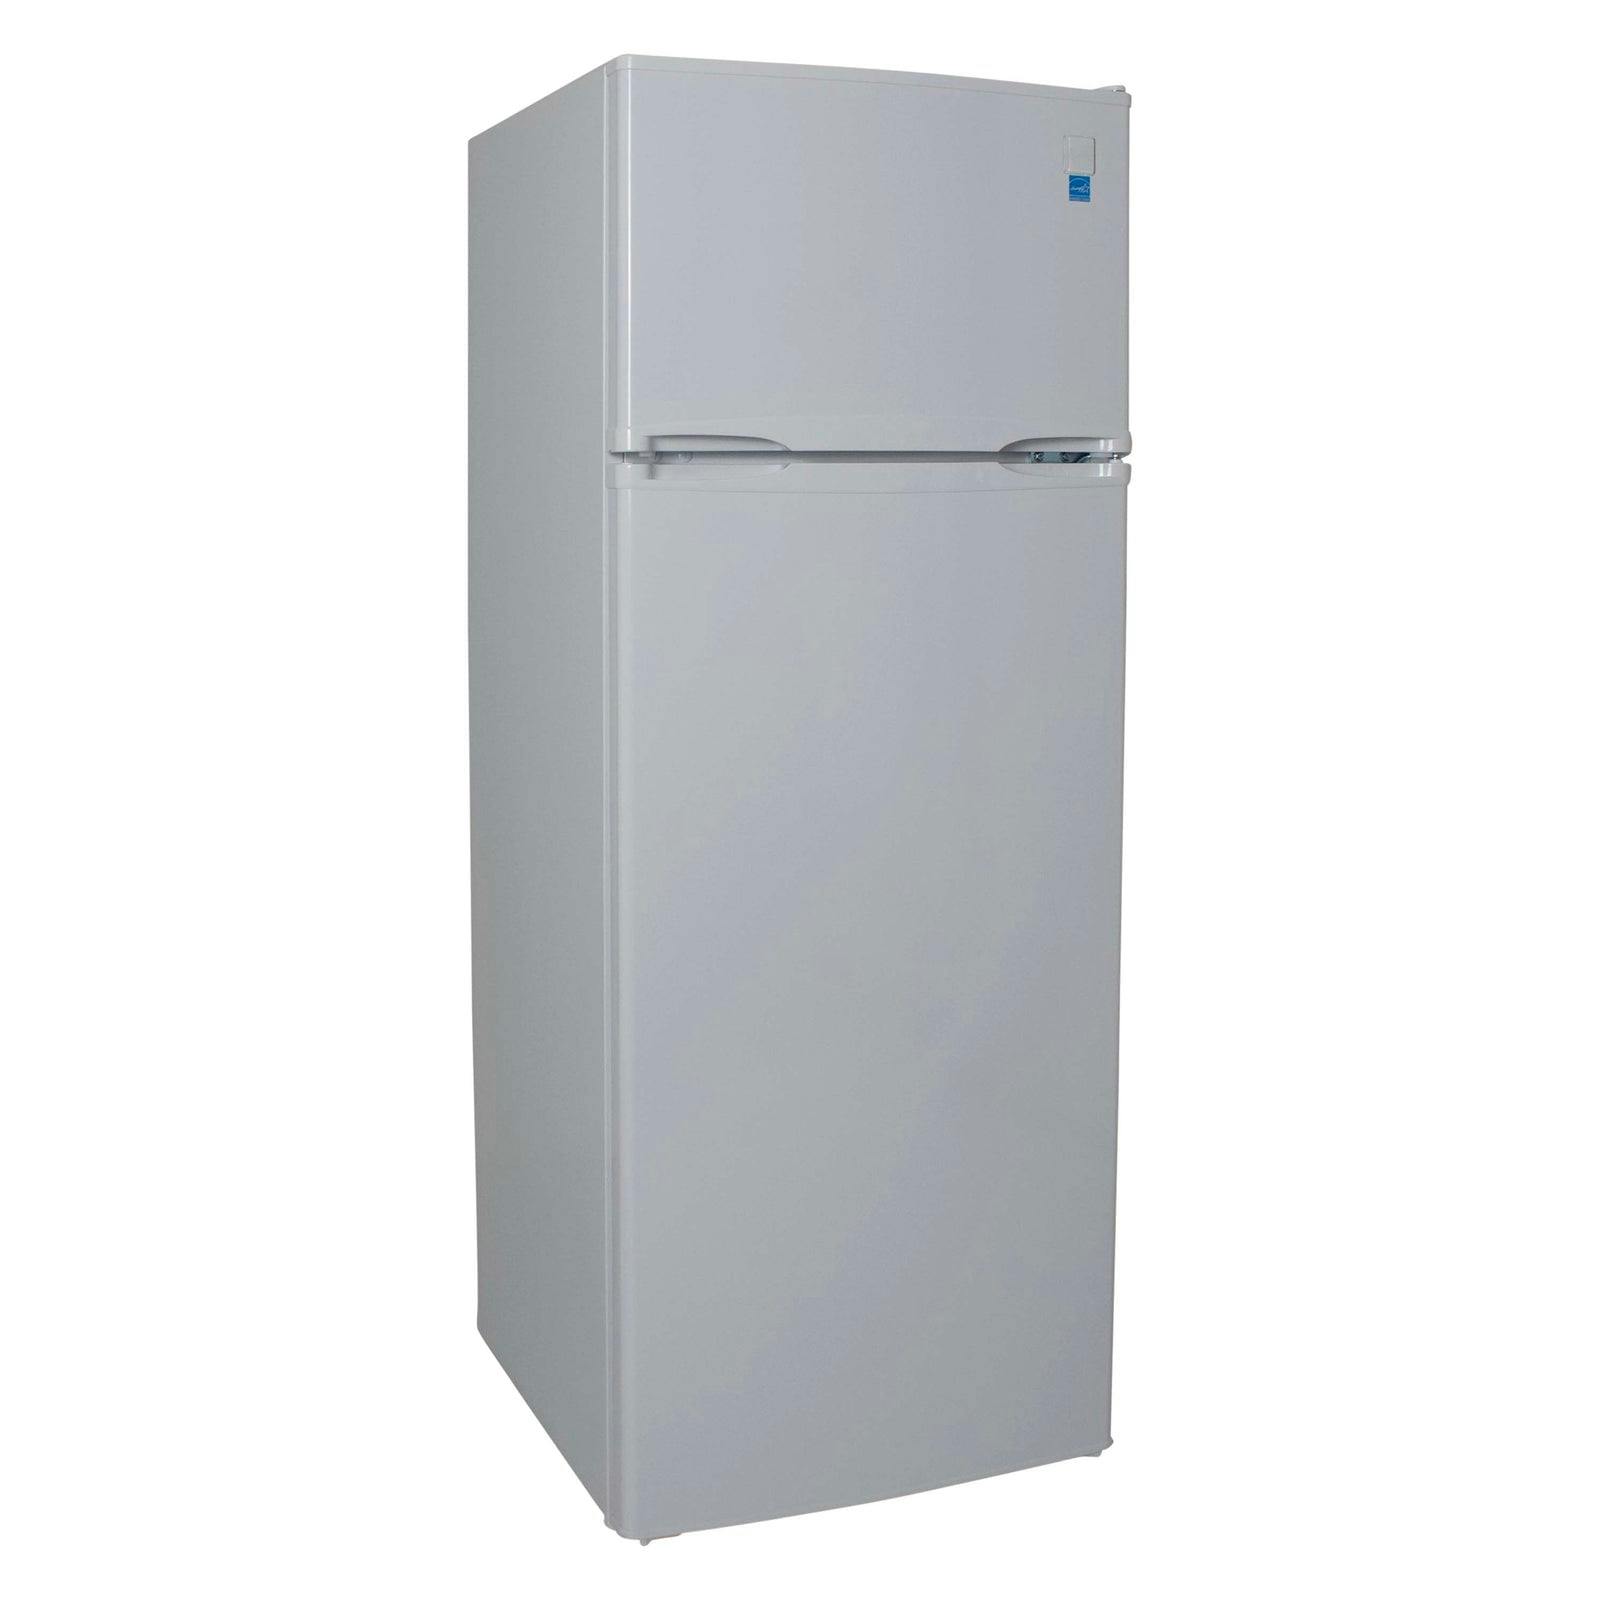 Compact 7.3 Cu. Ft White Energy Star Apartment Refrigerator